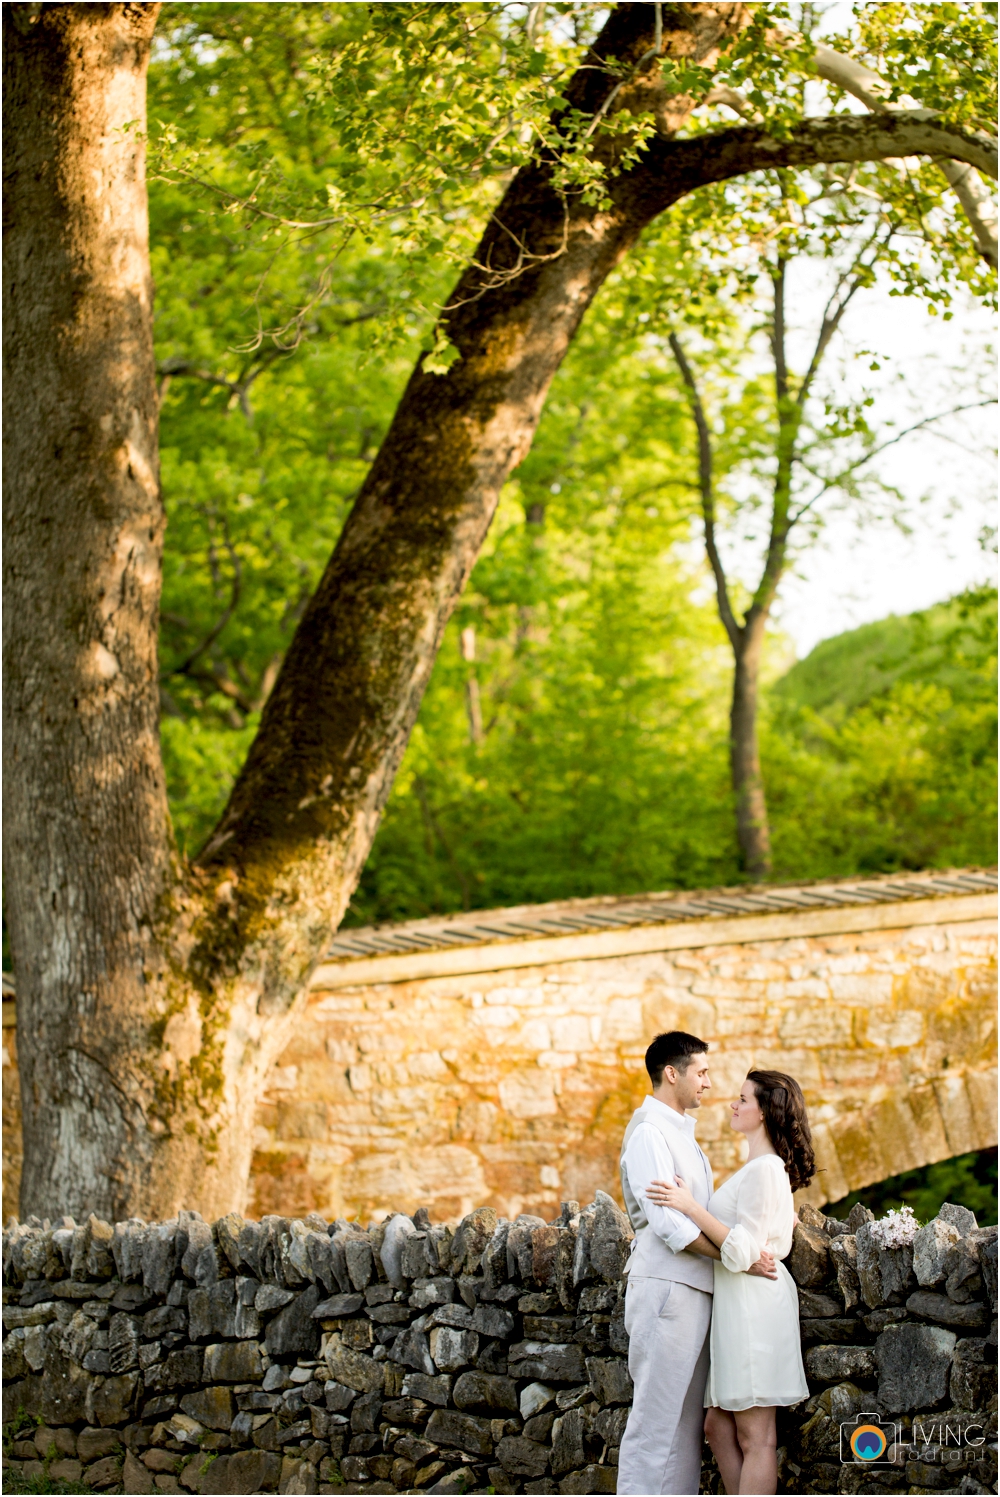 heather-carlos-outdoor-Antietam-National-Battlefield-engagement-session-living-radiant-phootgraphy-best-maryland-wedding-photographer_0014.jpg